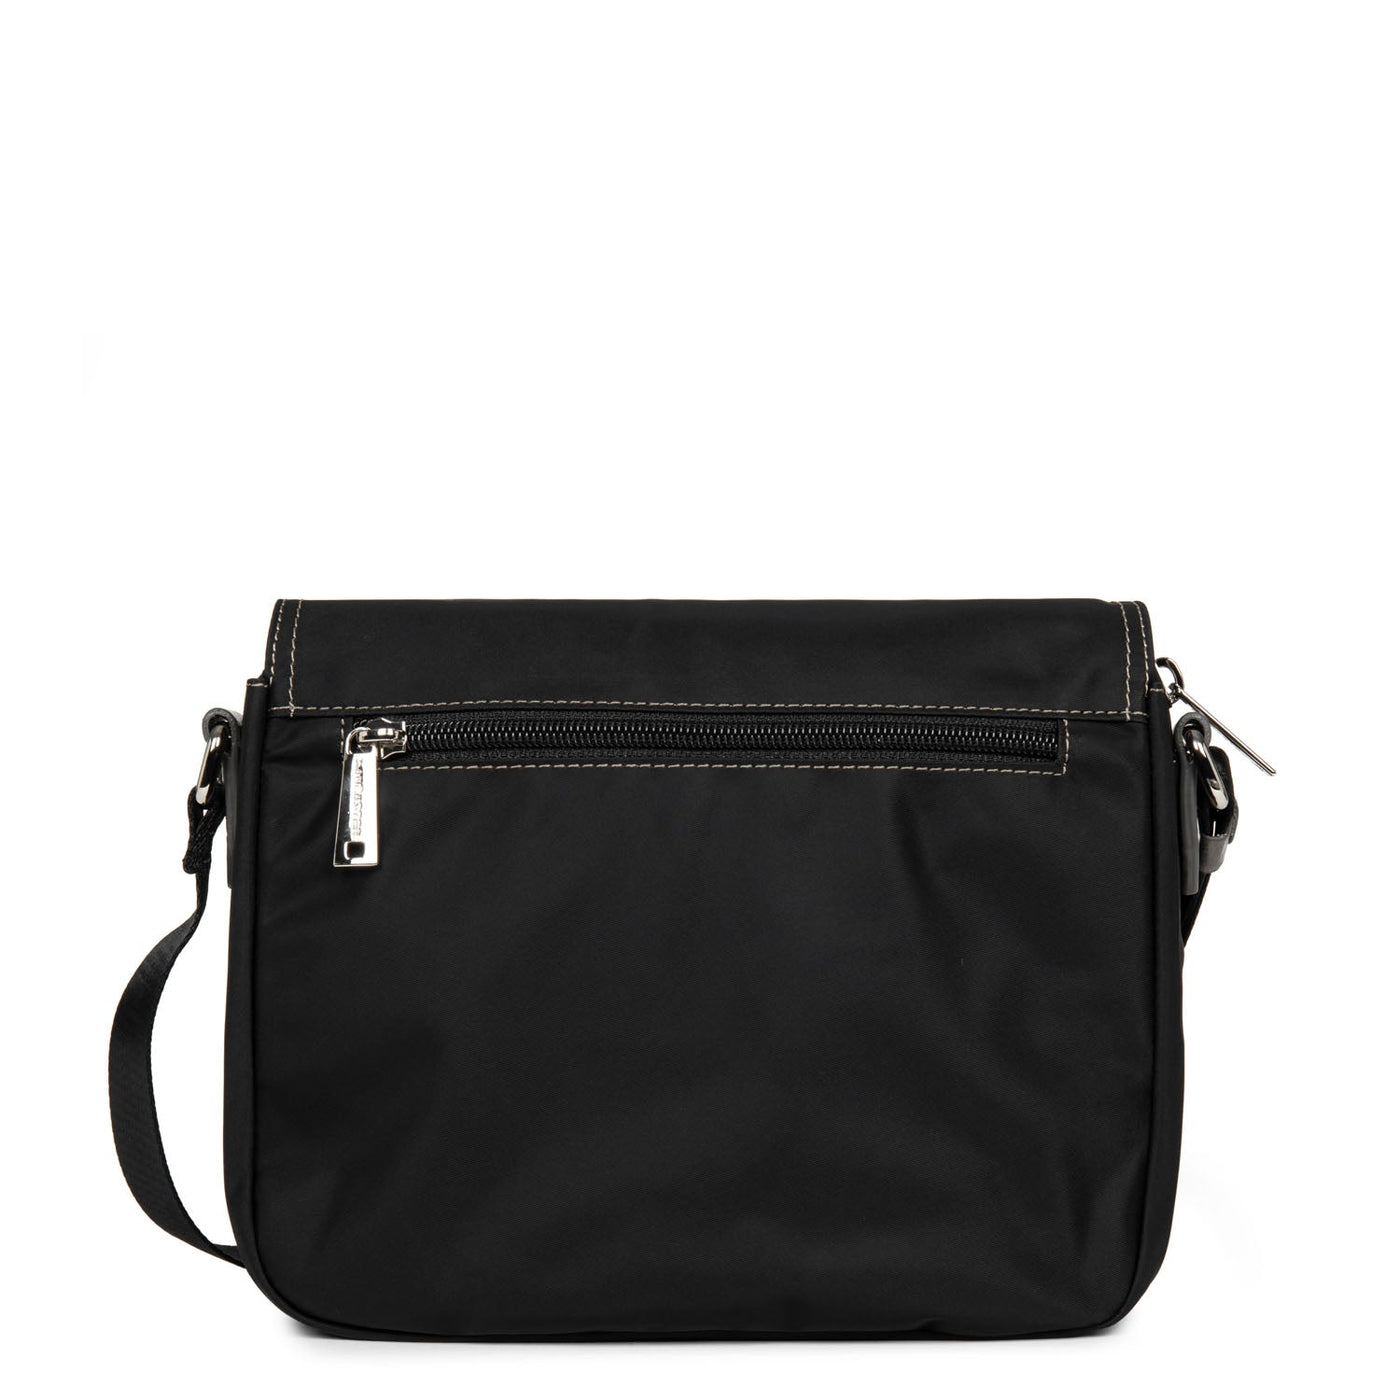 messenger bag - basic sport #couleur_noir-taupe-galet